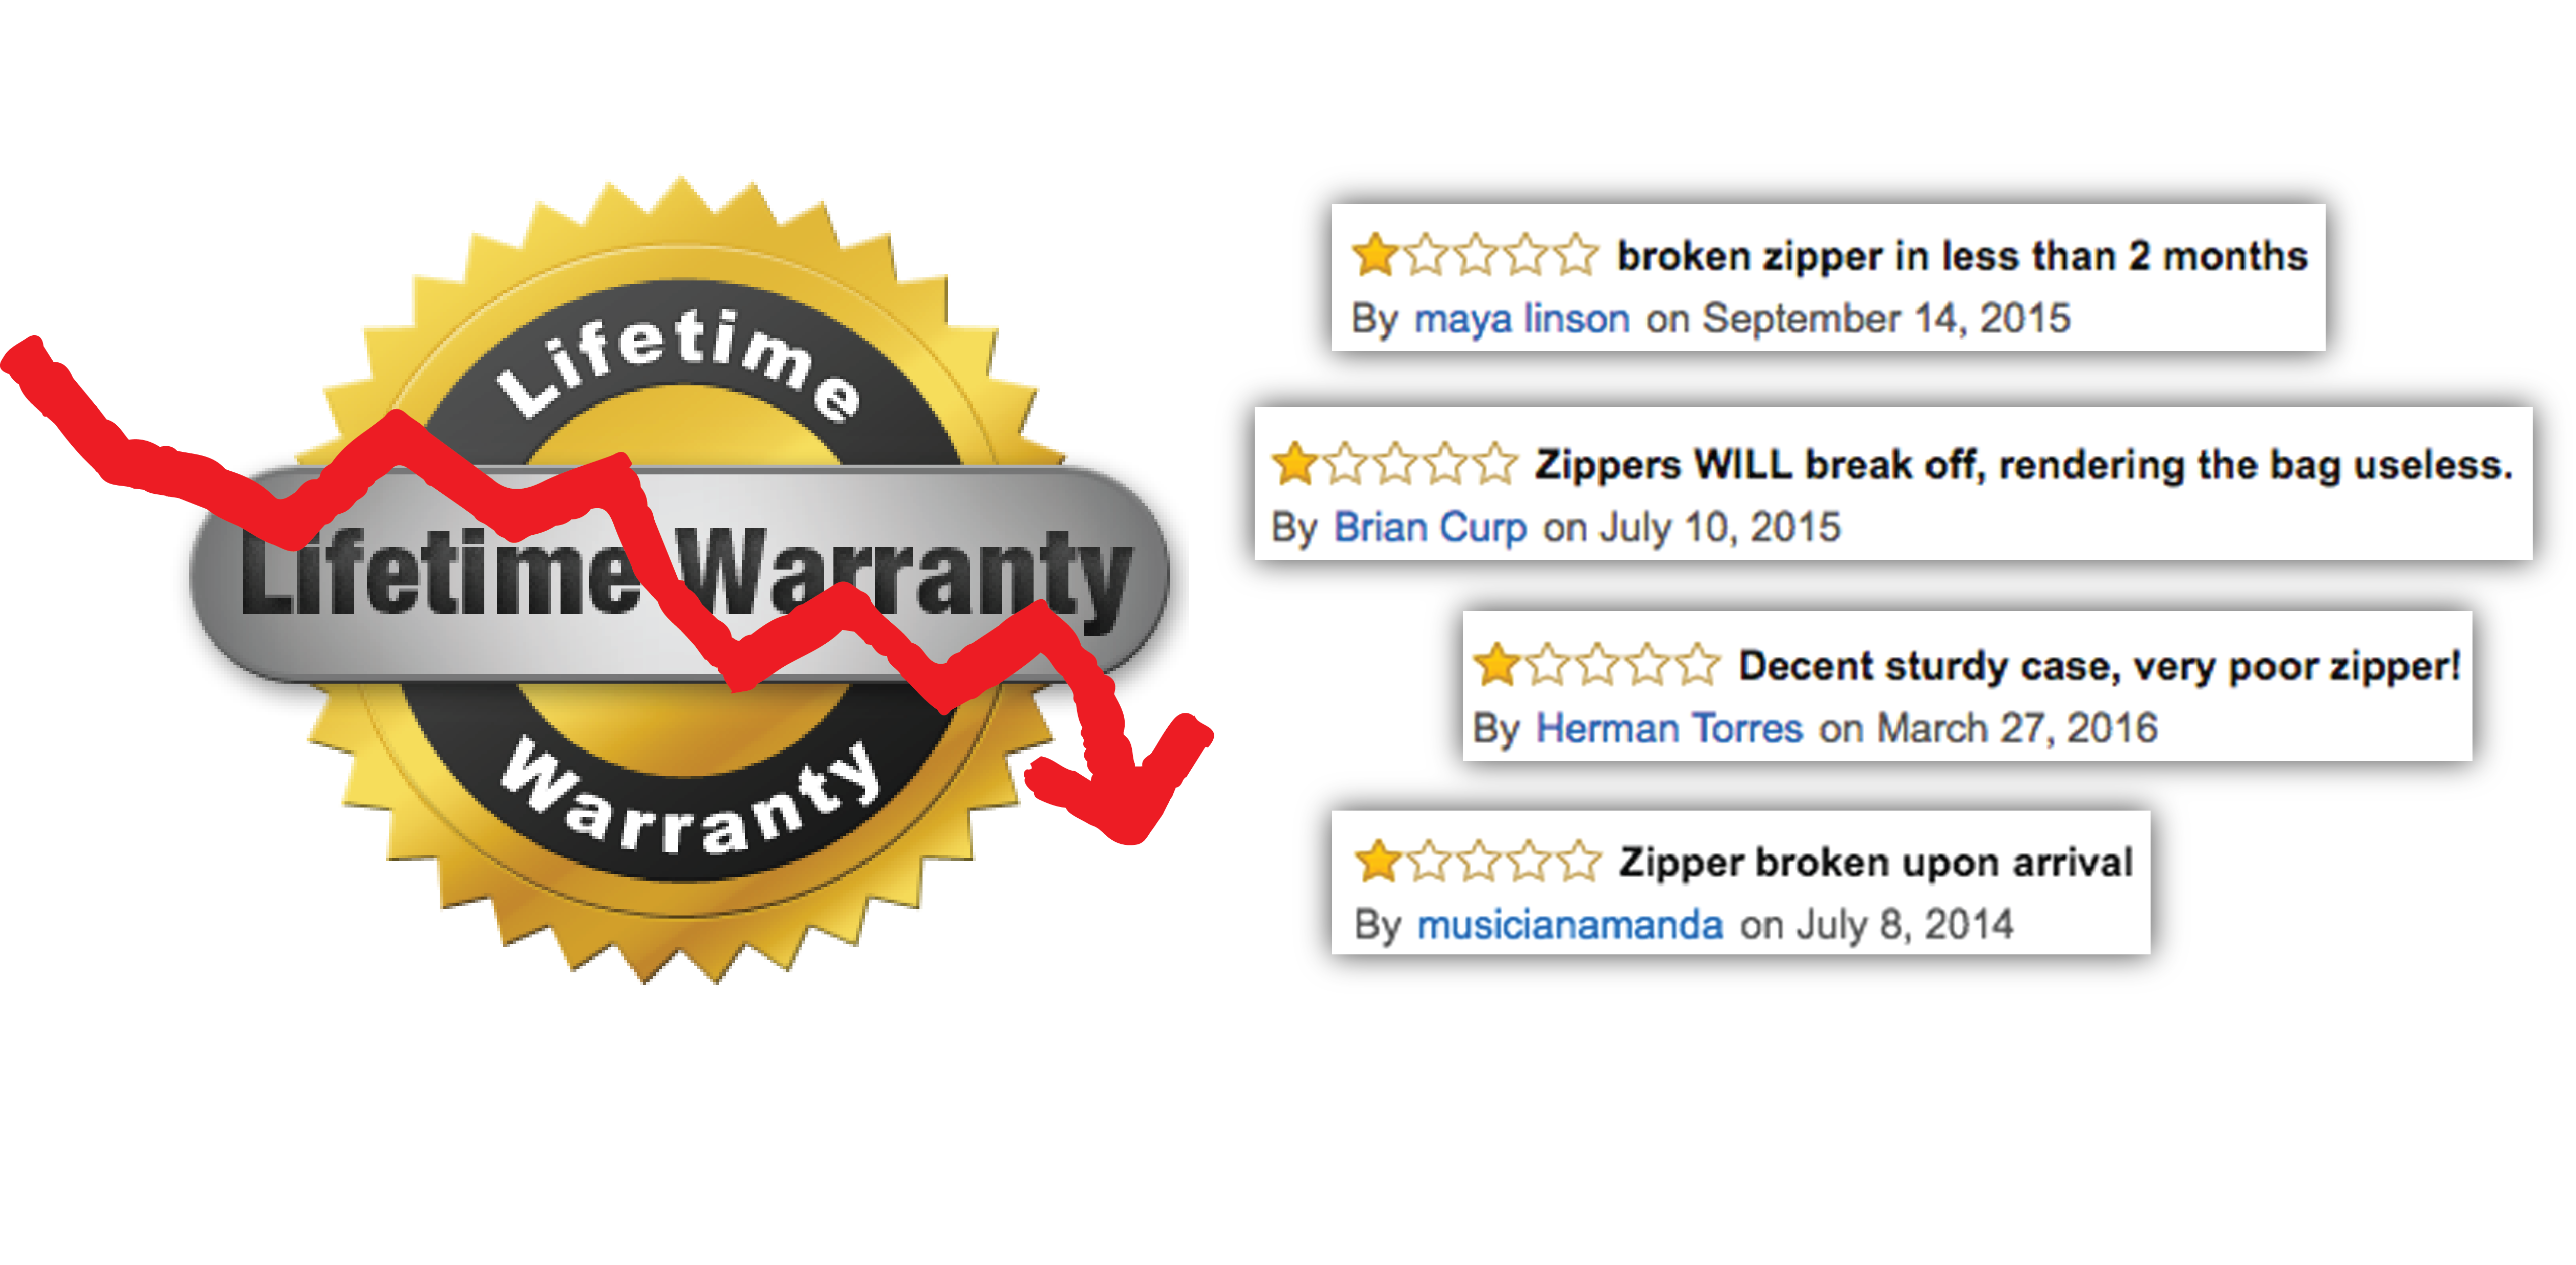 no more zipper woes, zipper warranty, or bad reviews